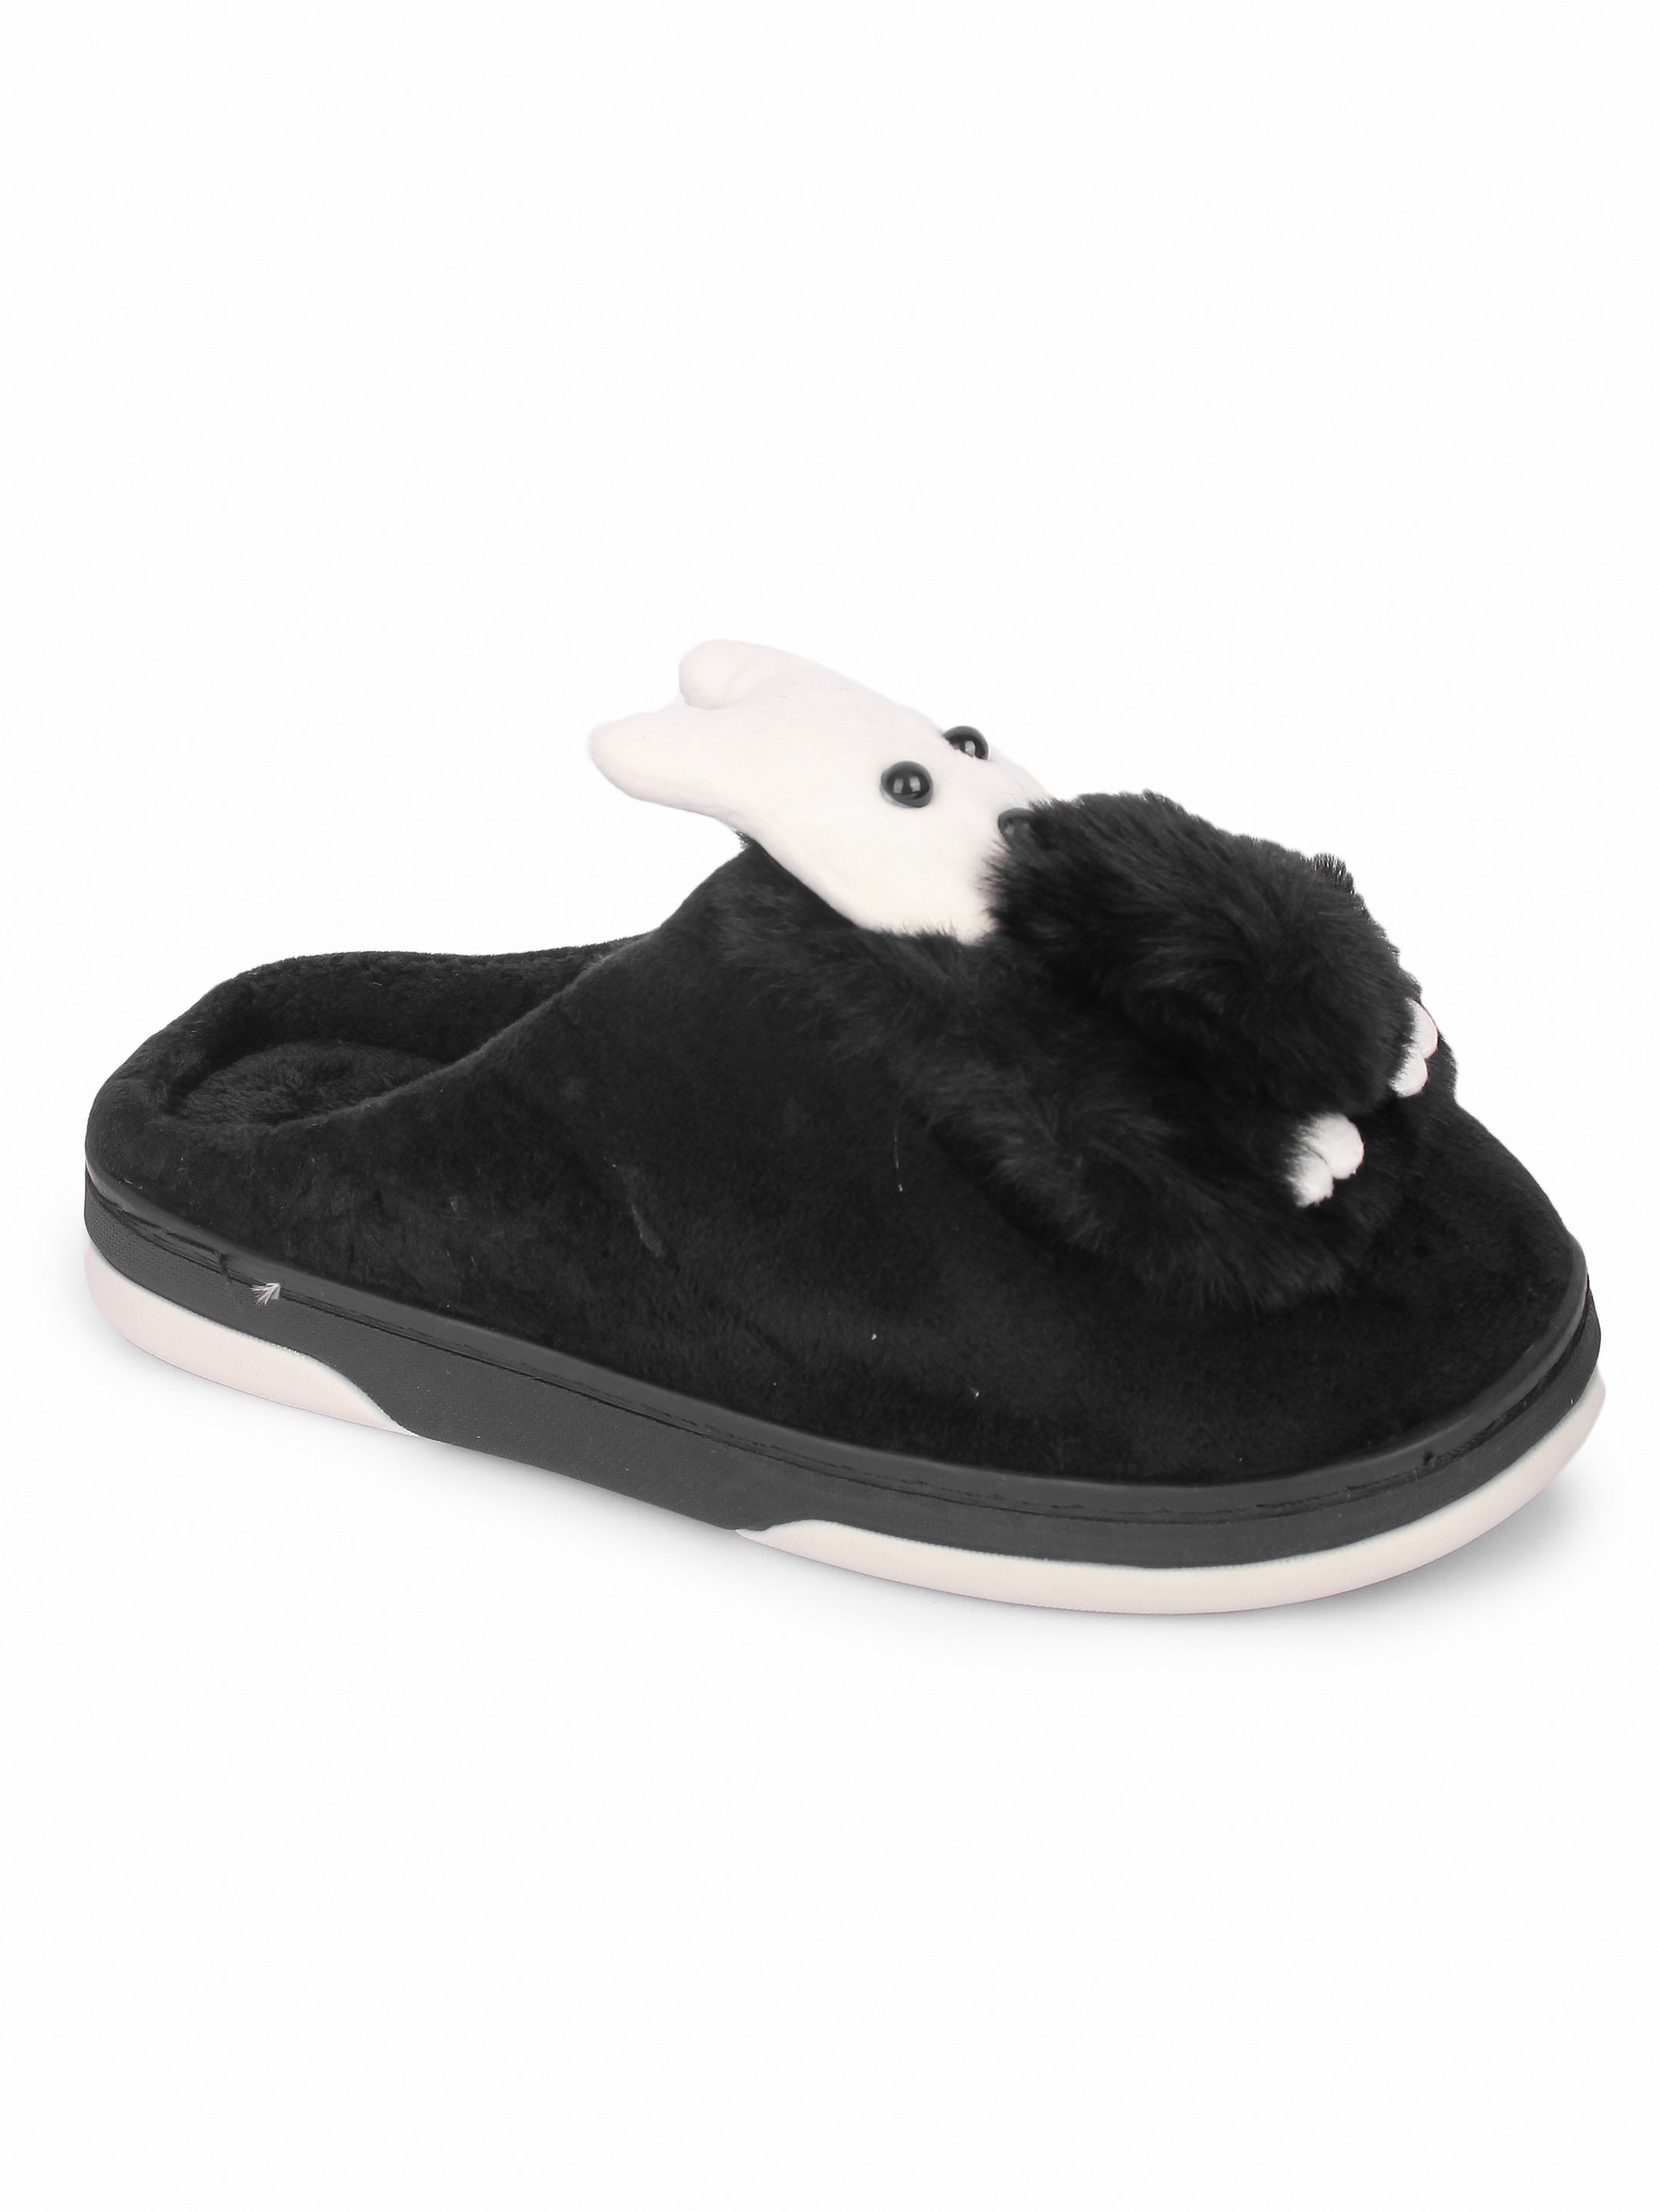 NEW! Real Fox Fur Slides / Fur Slippers | Fur shoes, Womens fashion winter,  Cute slippers